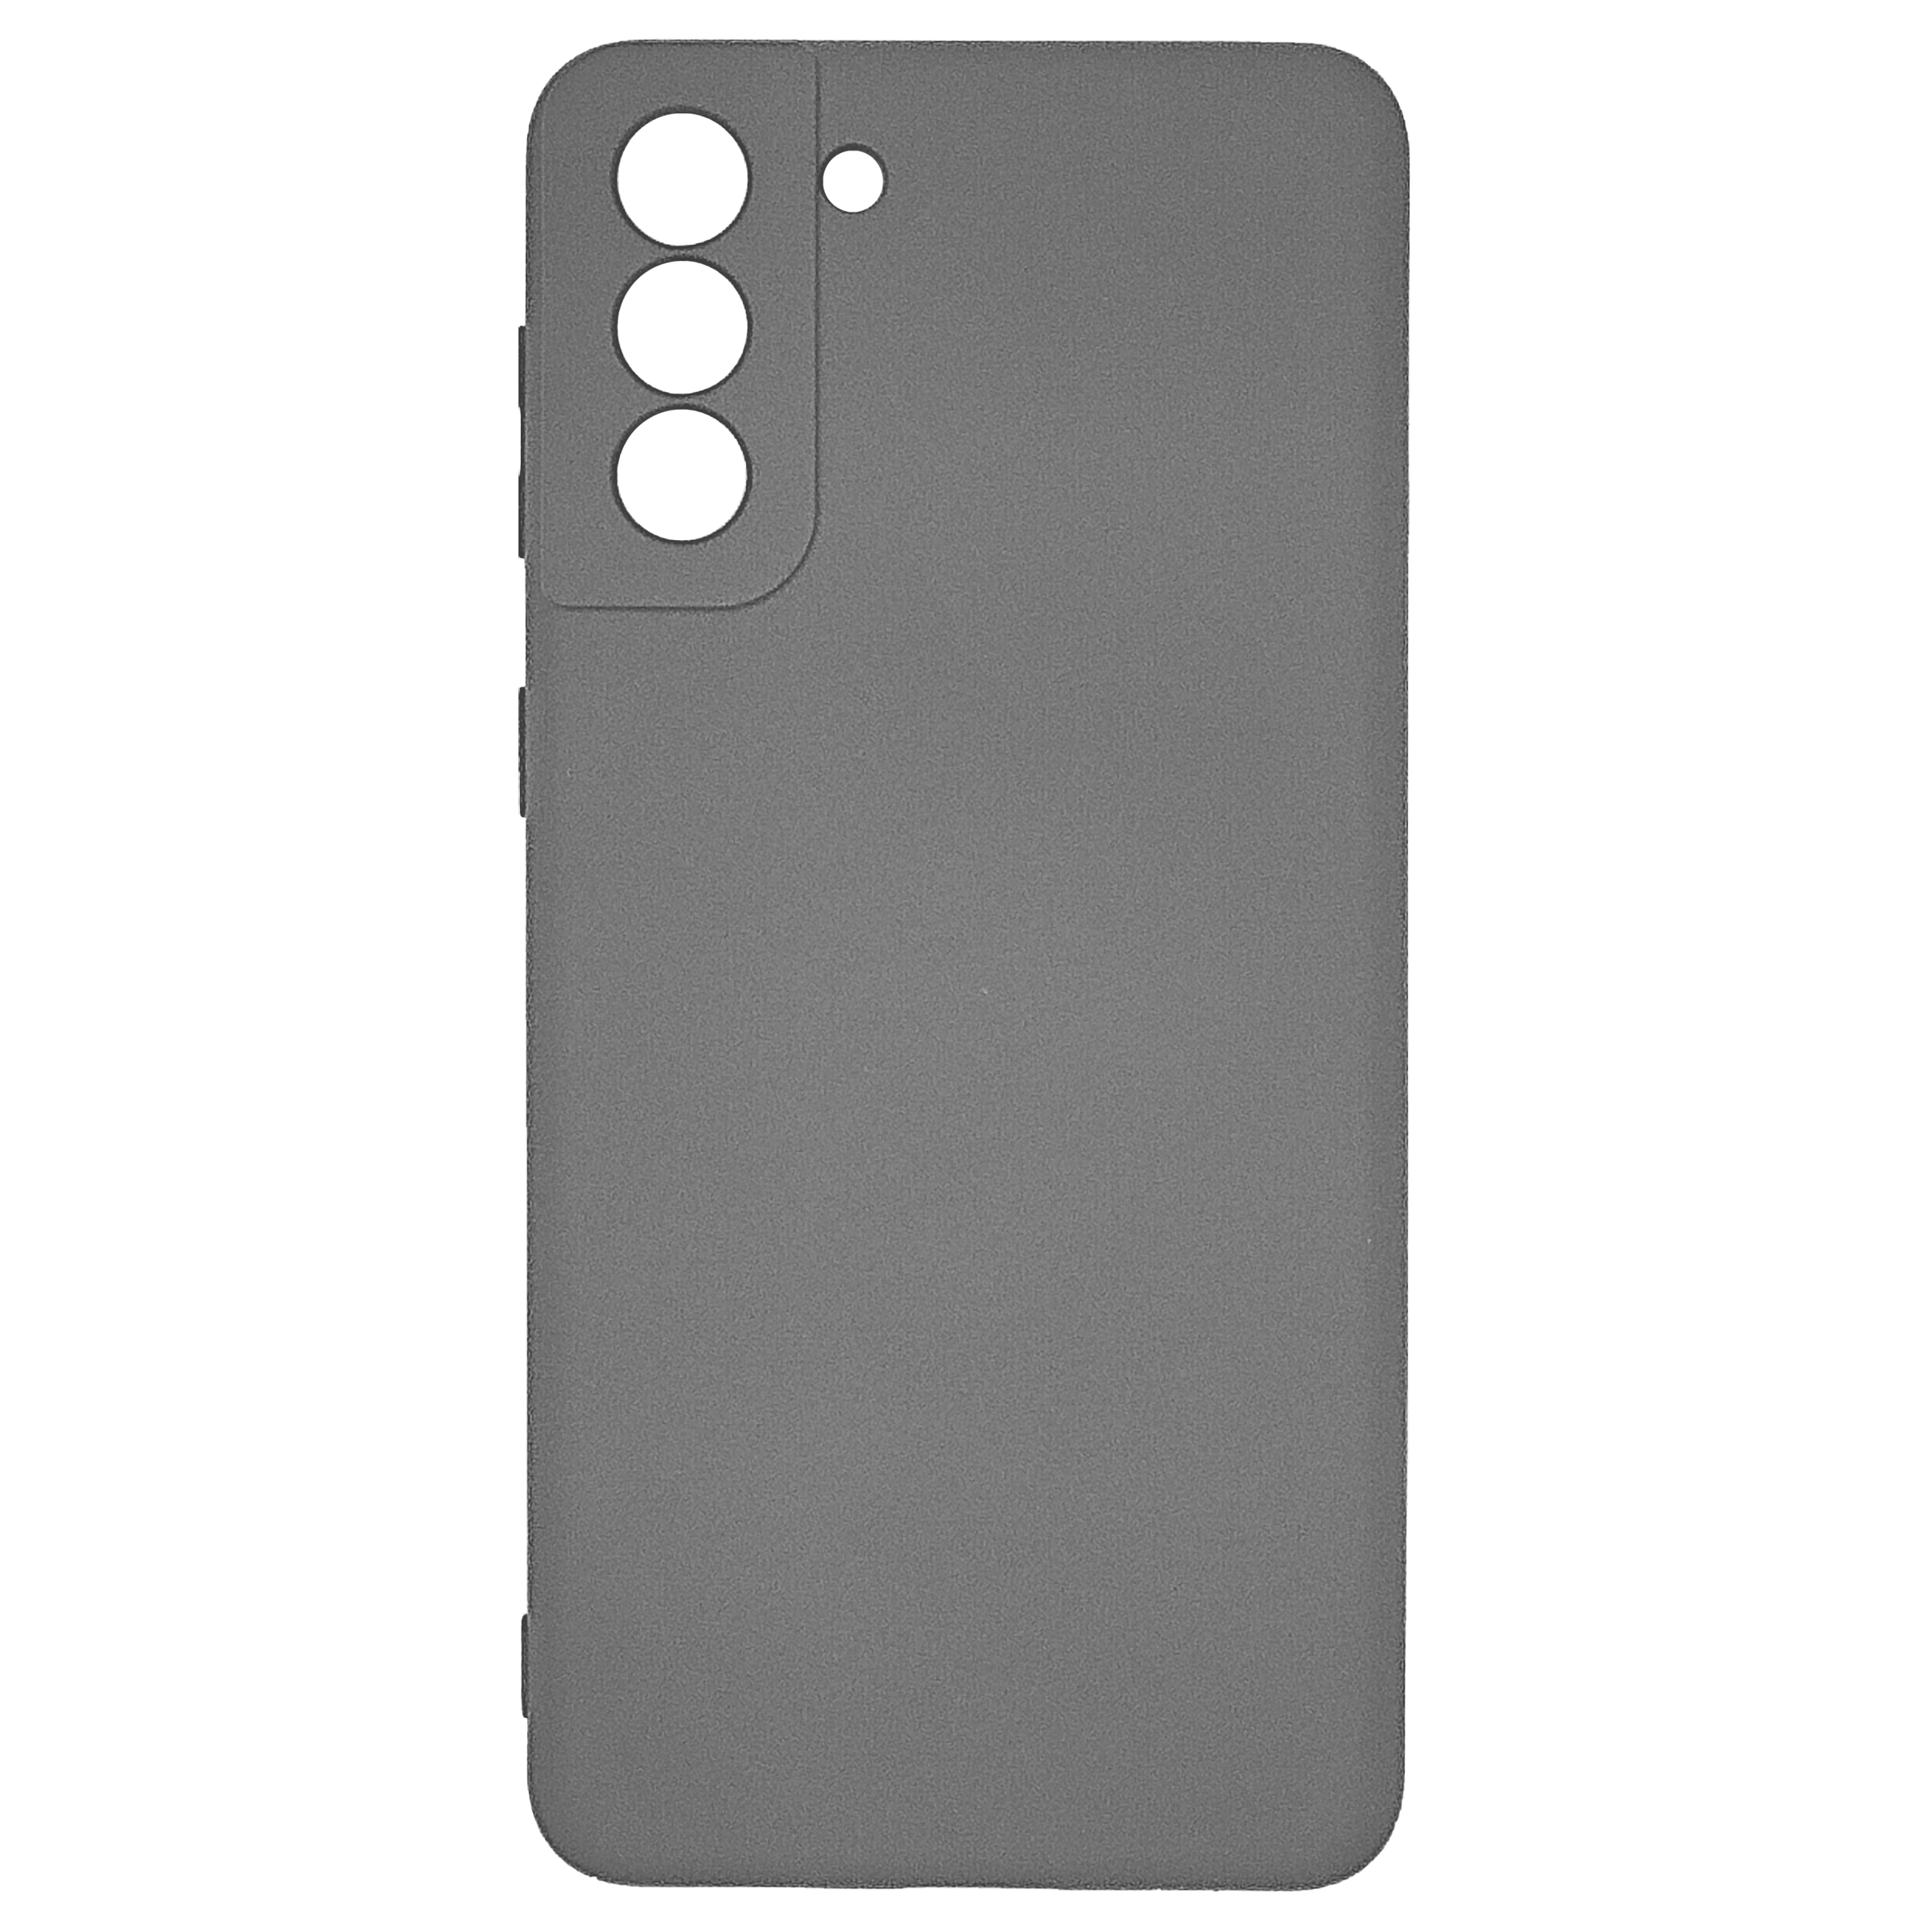 Soundrevo TPU Back Case For Samsung Galaxy S21+ (Anti-Slip, C021P, Grey)